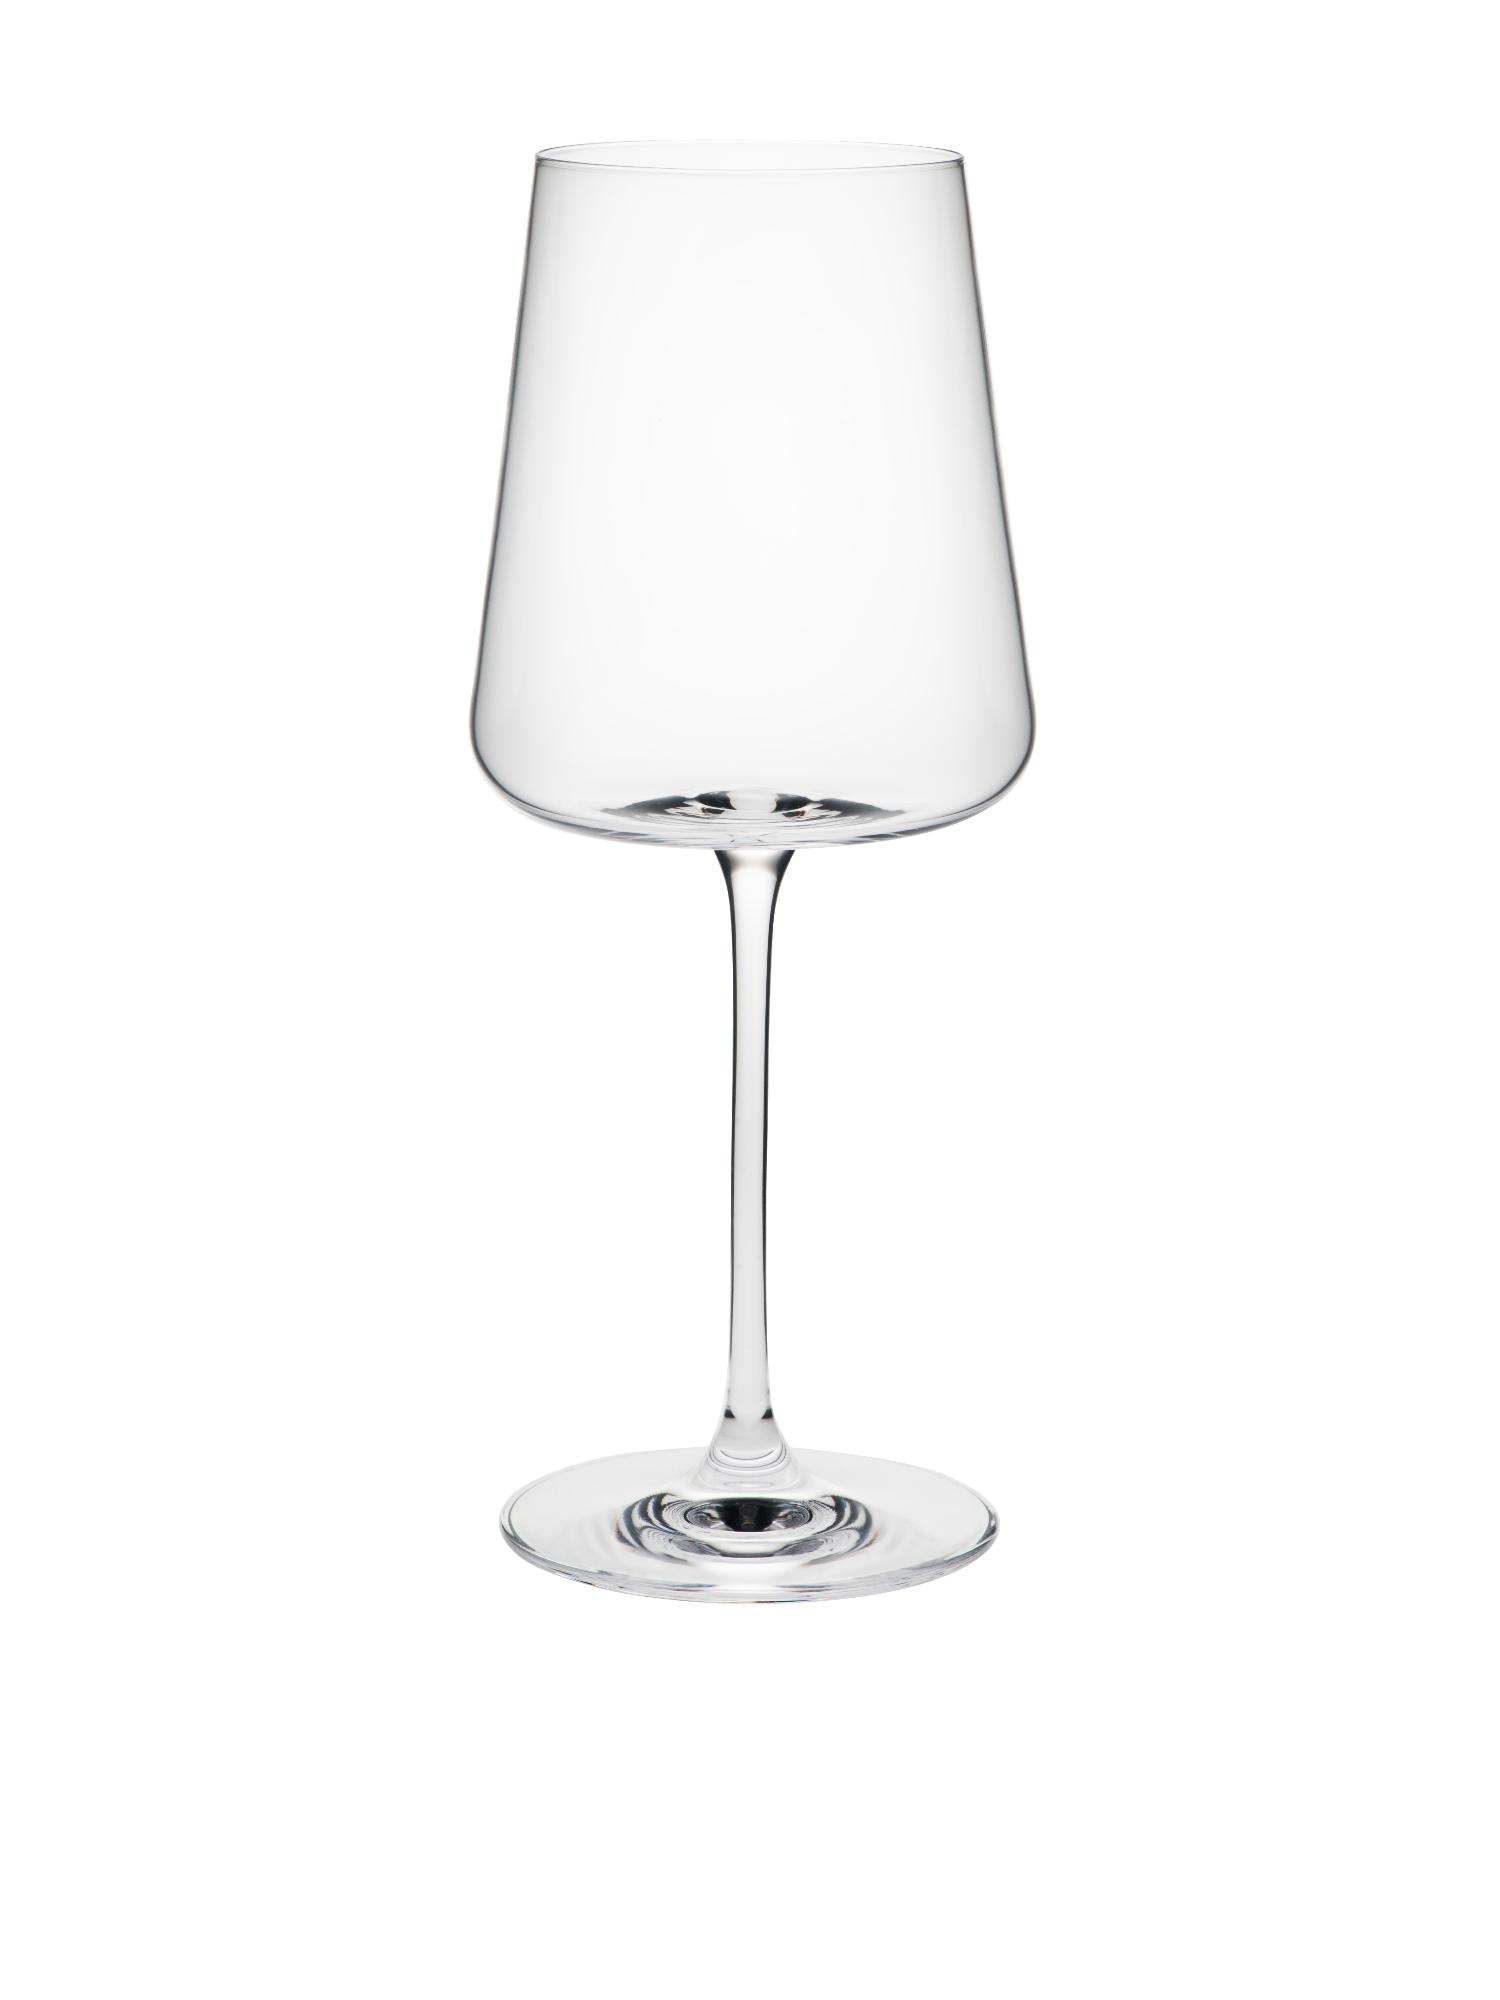 Mode wine glass, 550ml